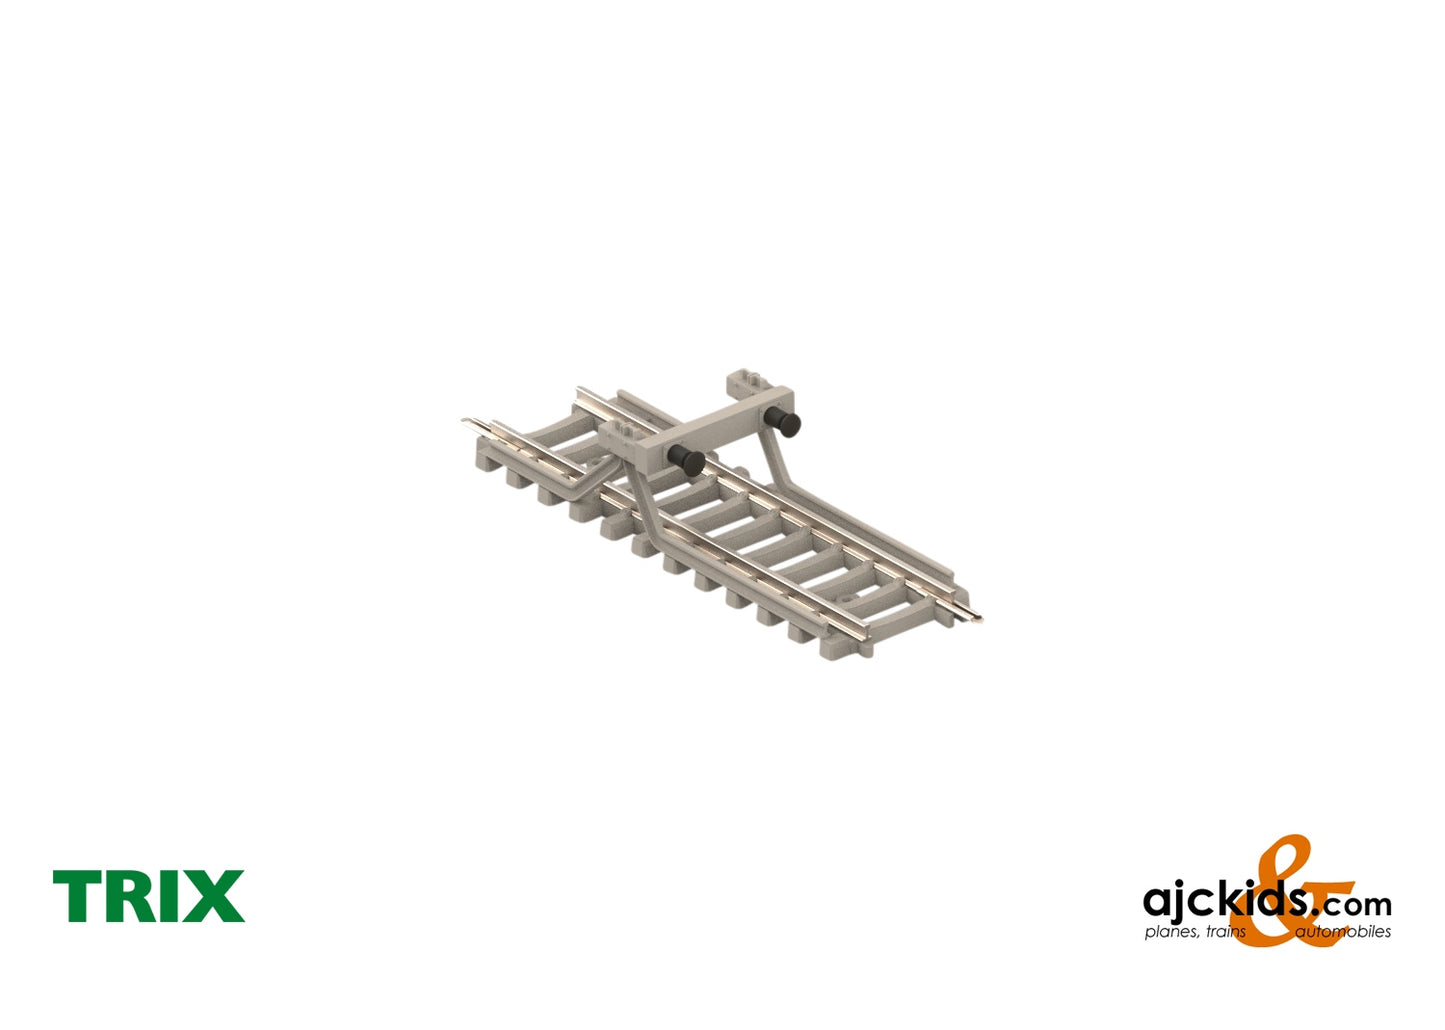 Trix 14591 - Track Bumper with Concrete Ties